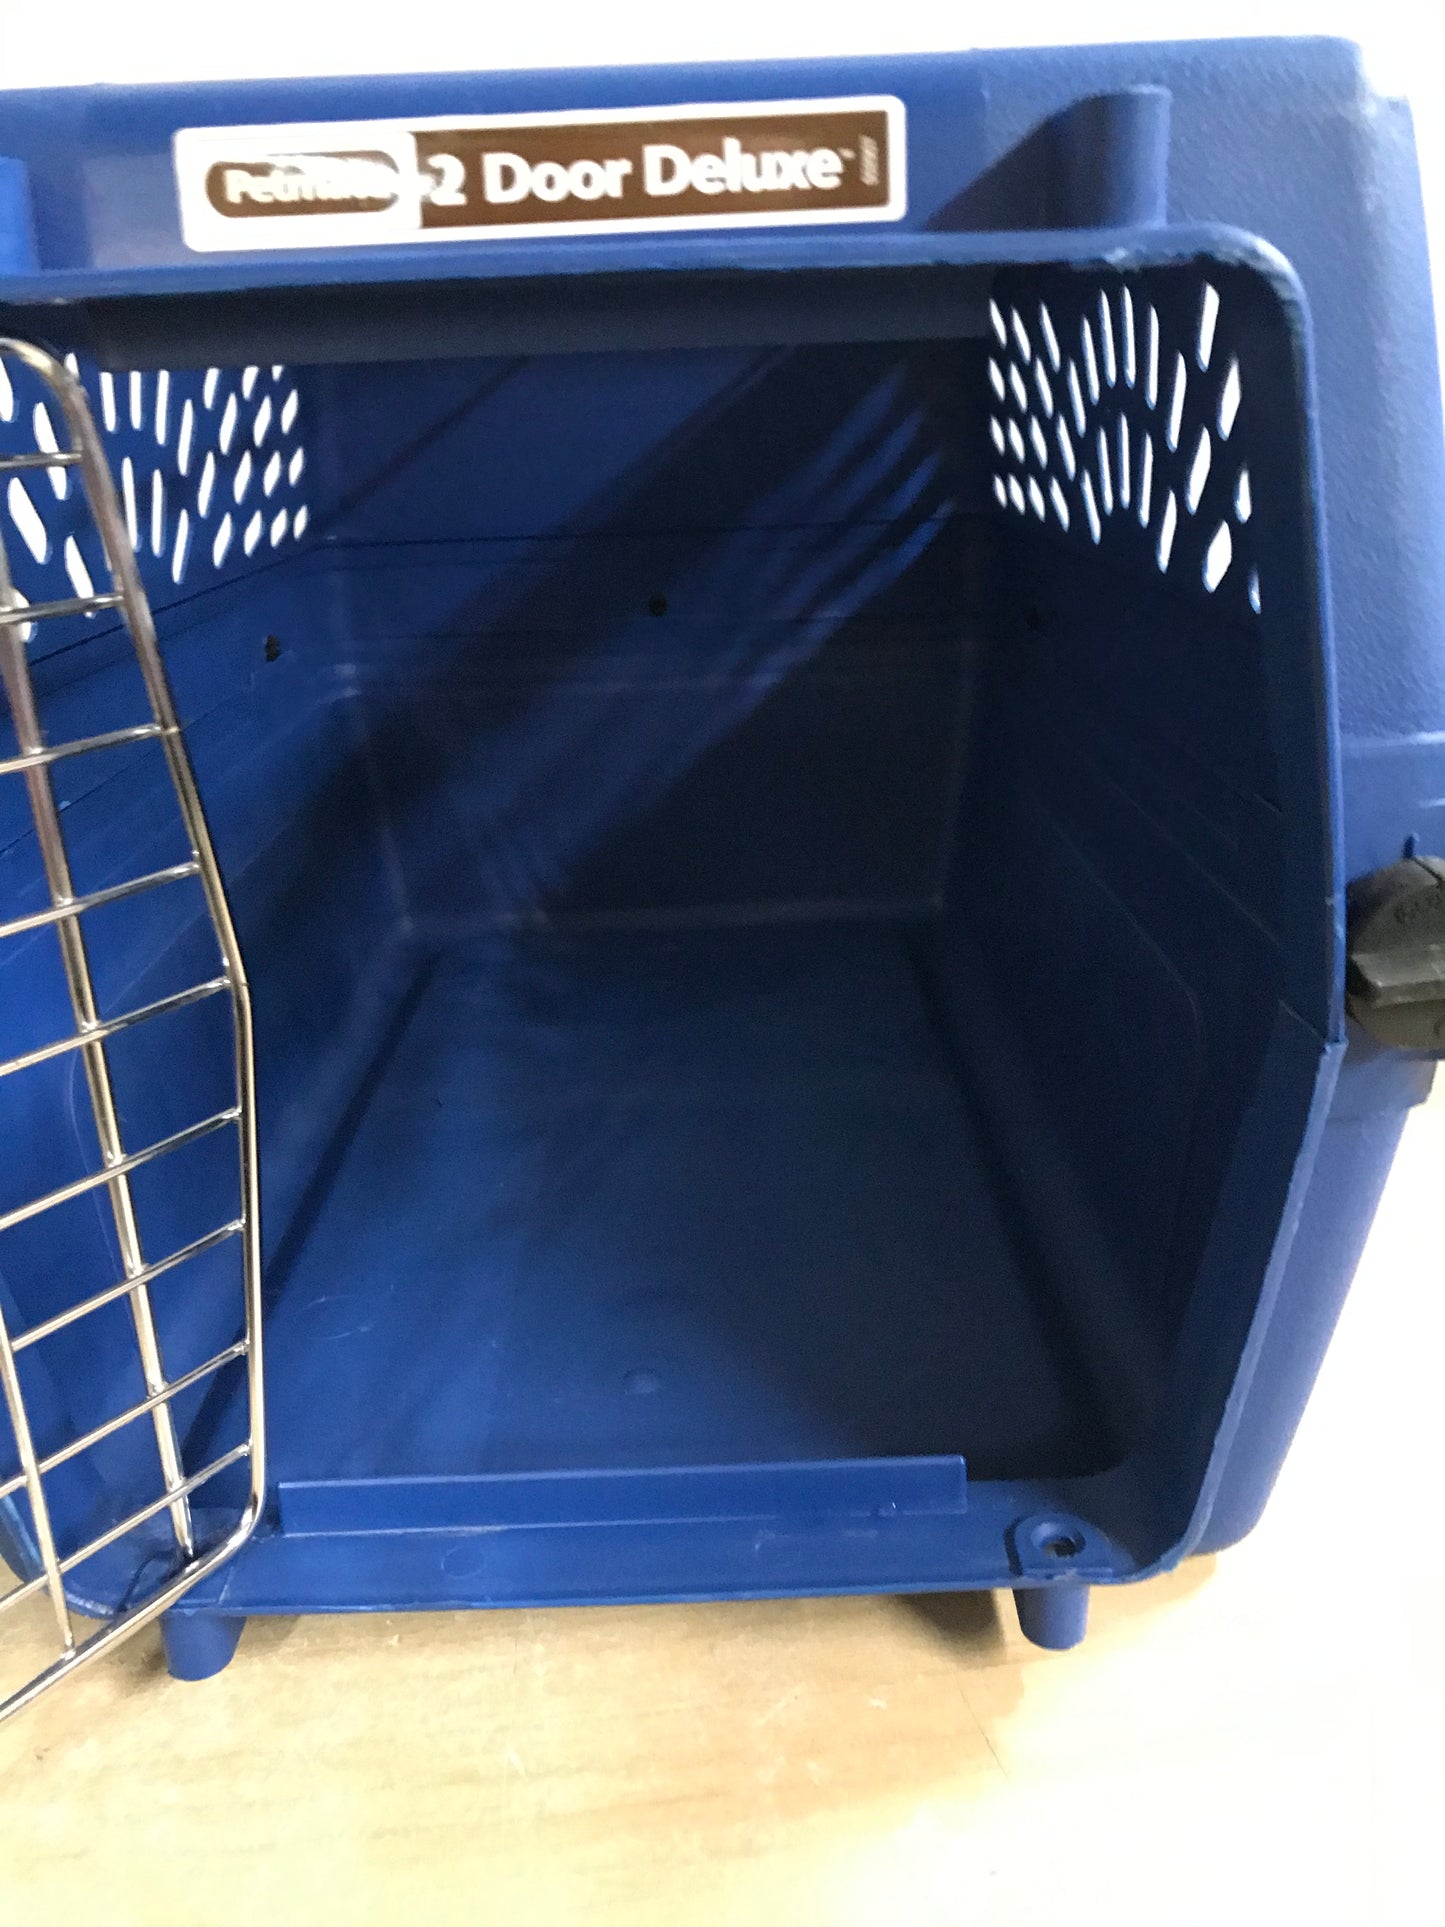 My Little Pet Shop Dog Puppy Cat Kennel Crate 2 Door Deluxe Pet Mate 2 Front and Top Door Fits Up To 12 lb Blue 18x15x12 inch Excellent